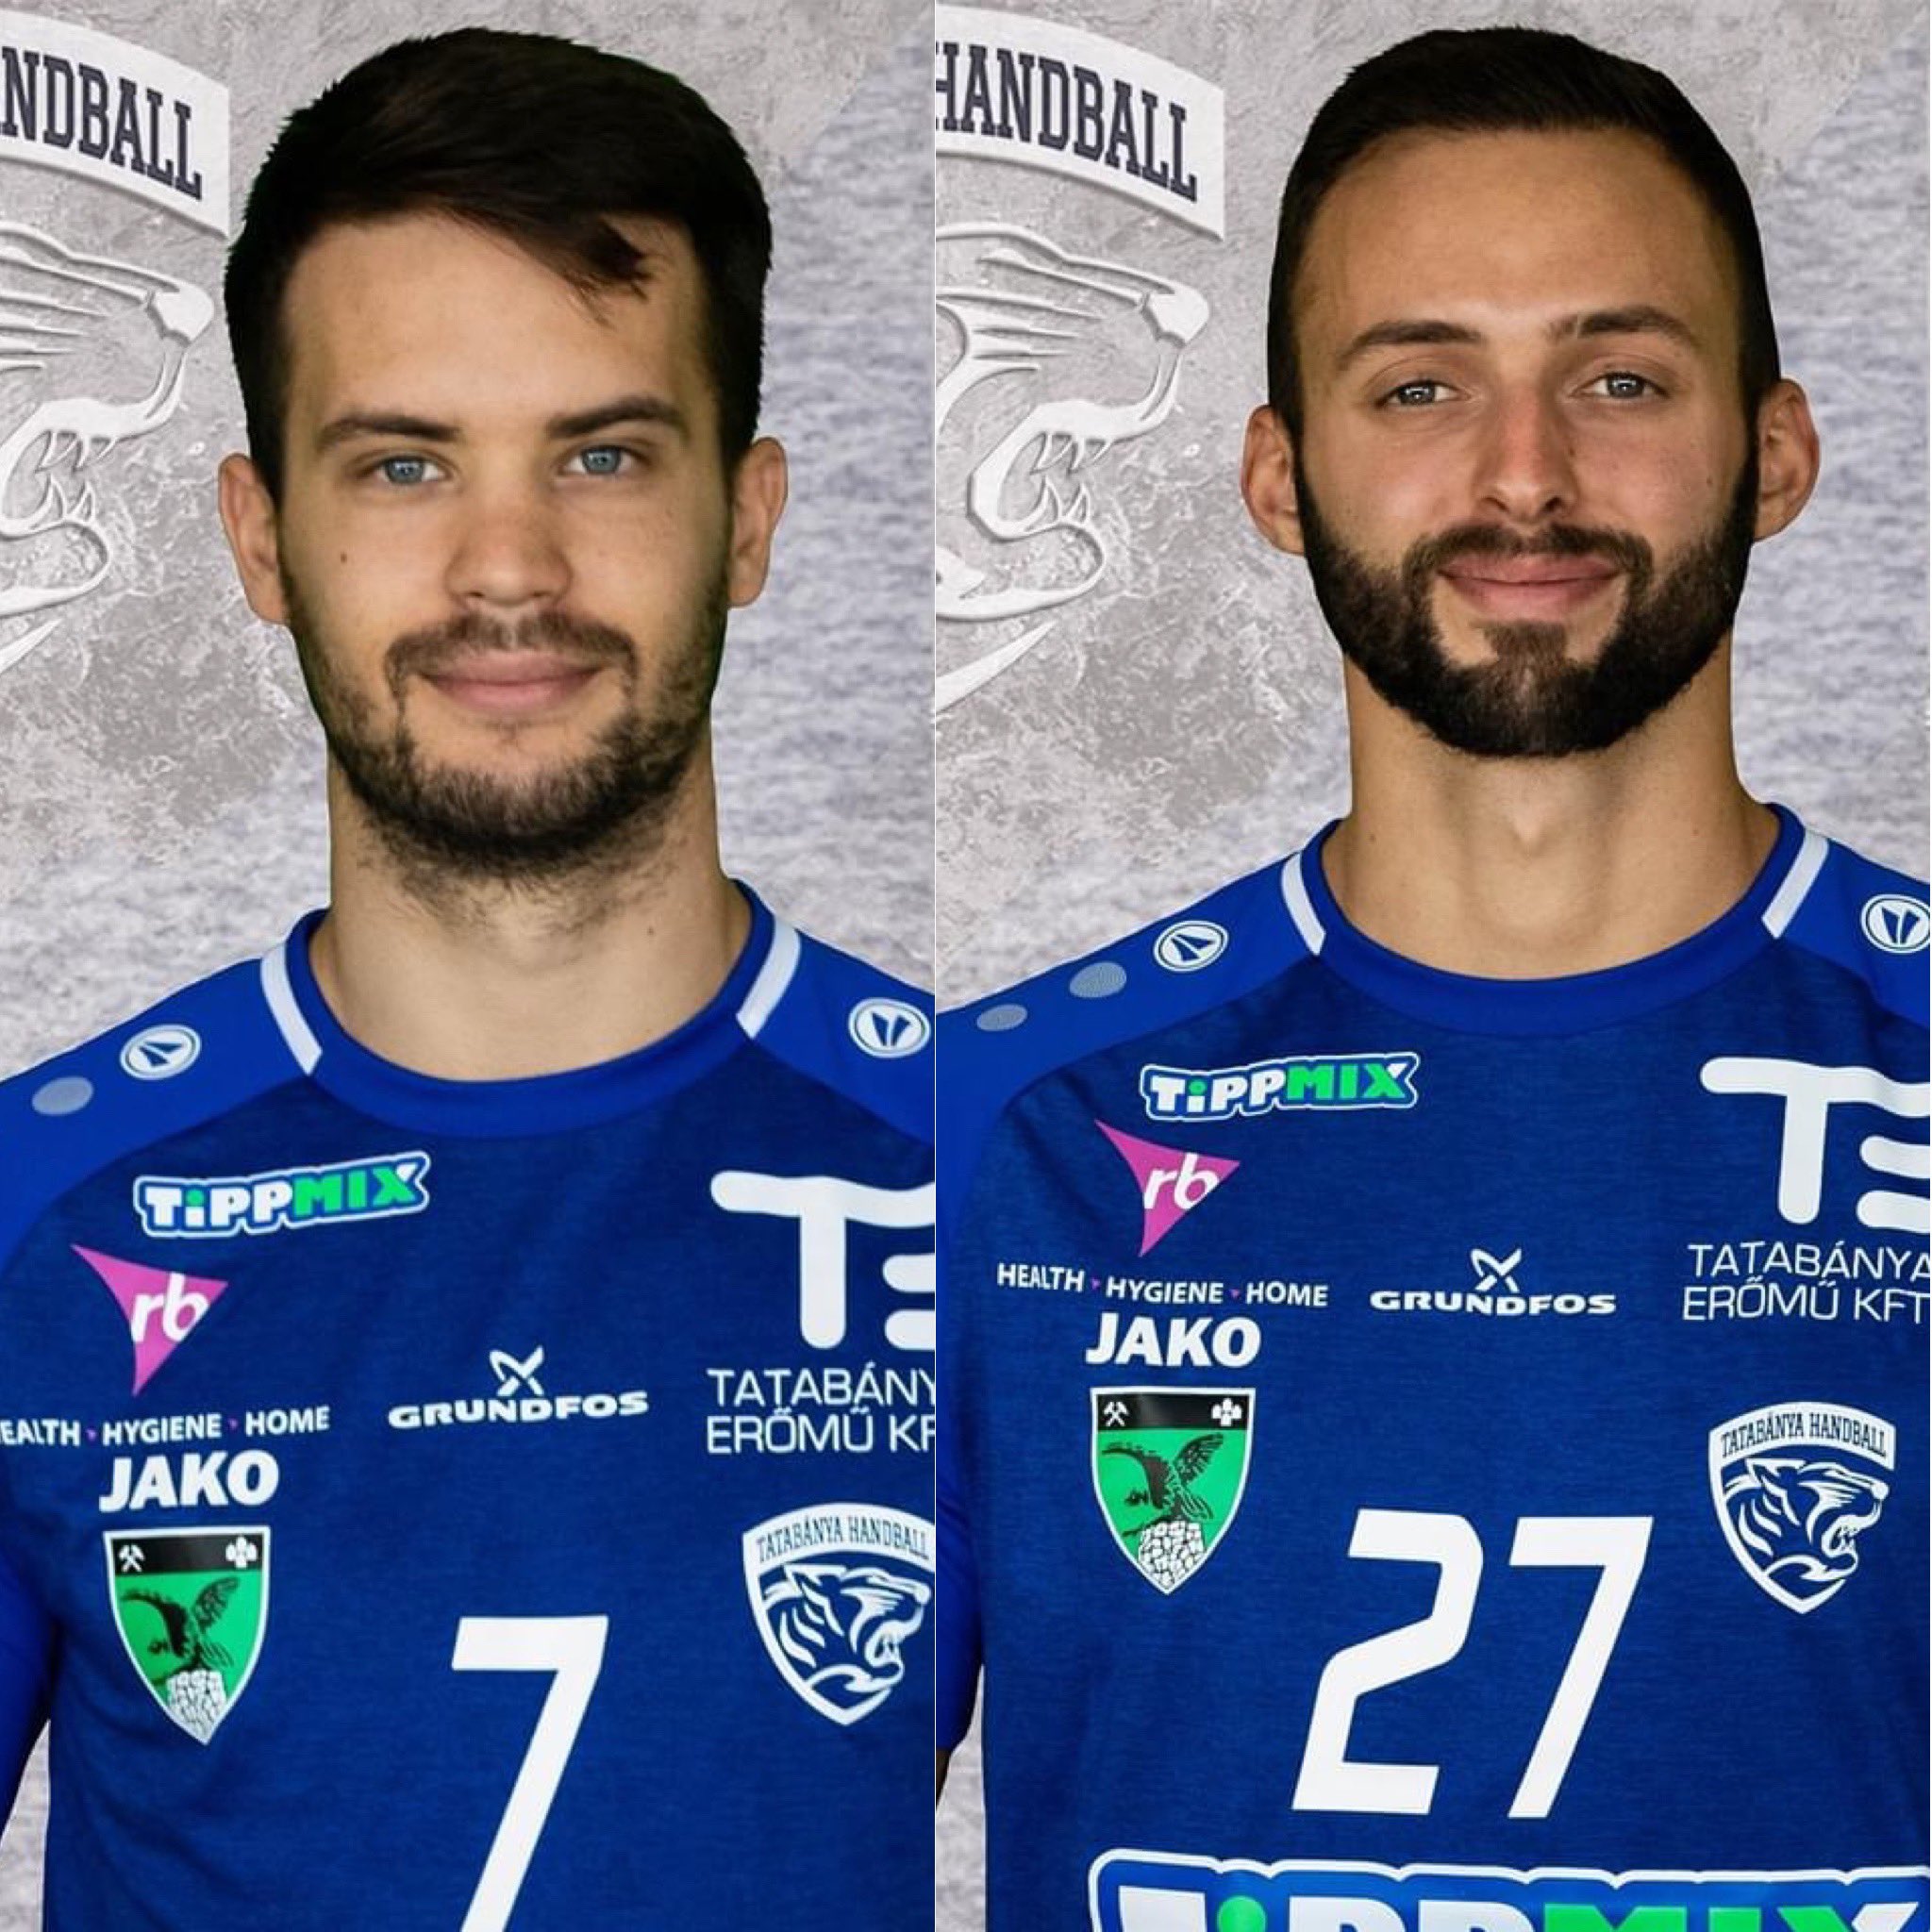 Handballtransfers on Twitter: "The Hungarian Grundfos Tatabanya KC has extended contracts of the national players Adam Juhasz Gabor Ancsin for another year. 📸: Grundfos Tatabánya Kézilabda Club #handball